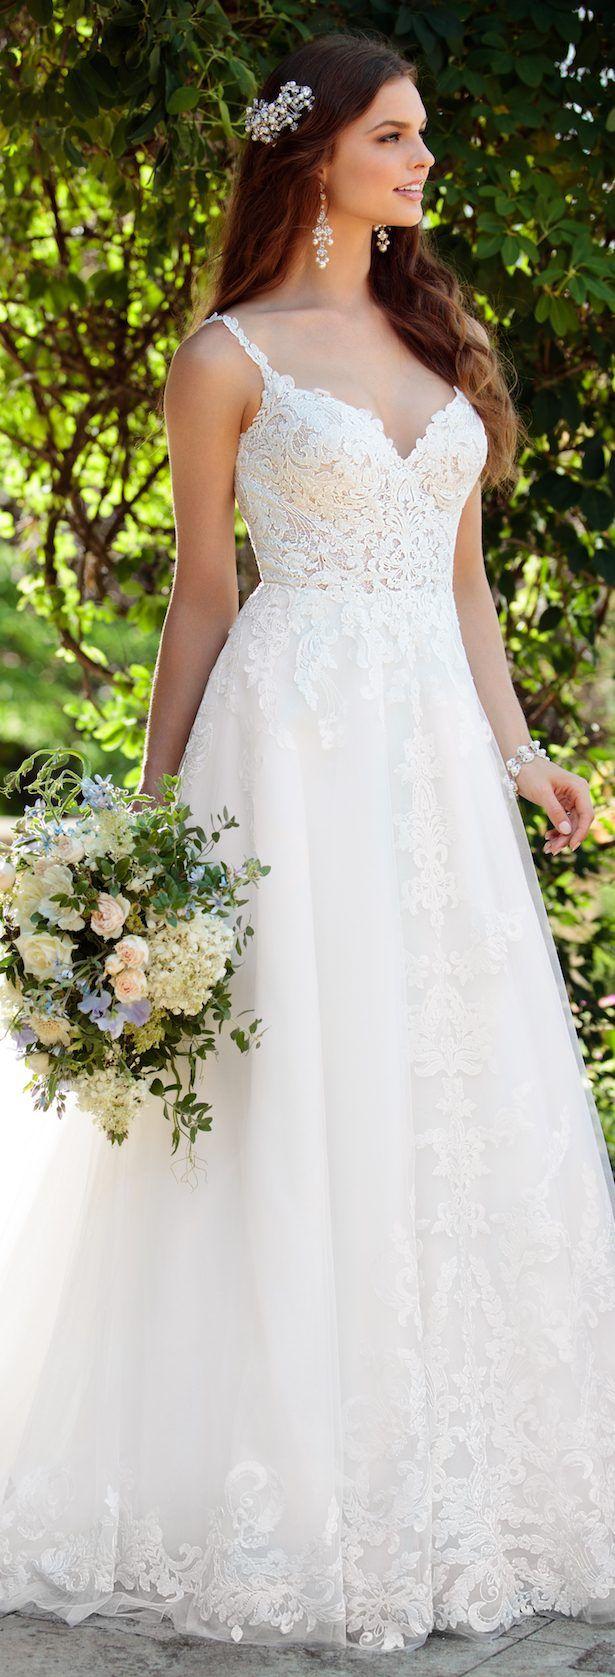 زفاف - Wedding Dress By Essense Of Australia Spring 2017 Bridal Collection